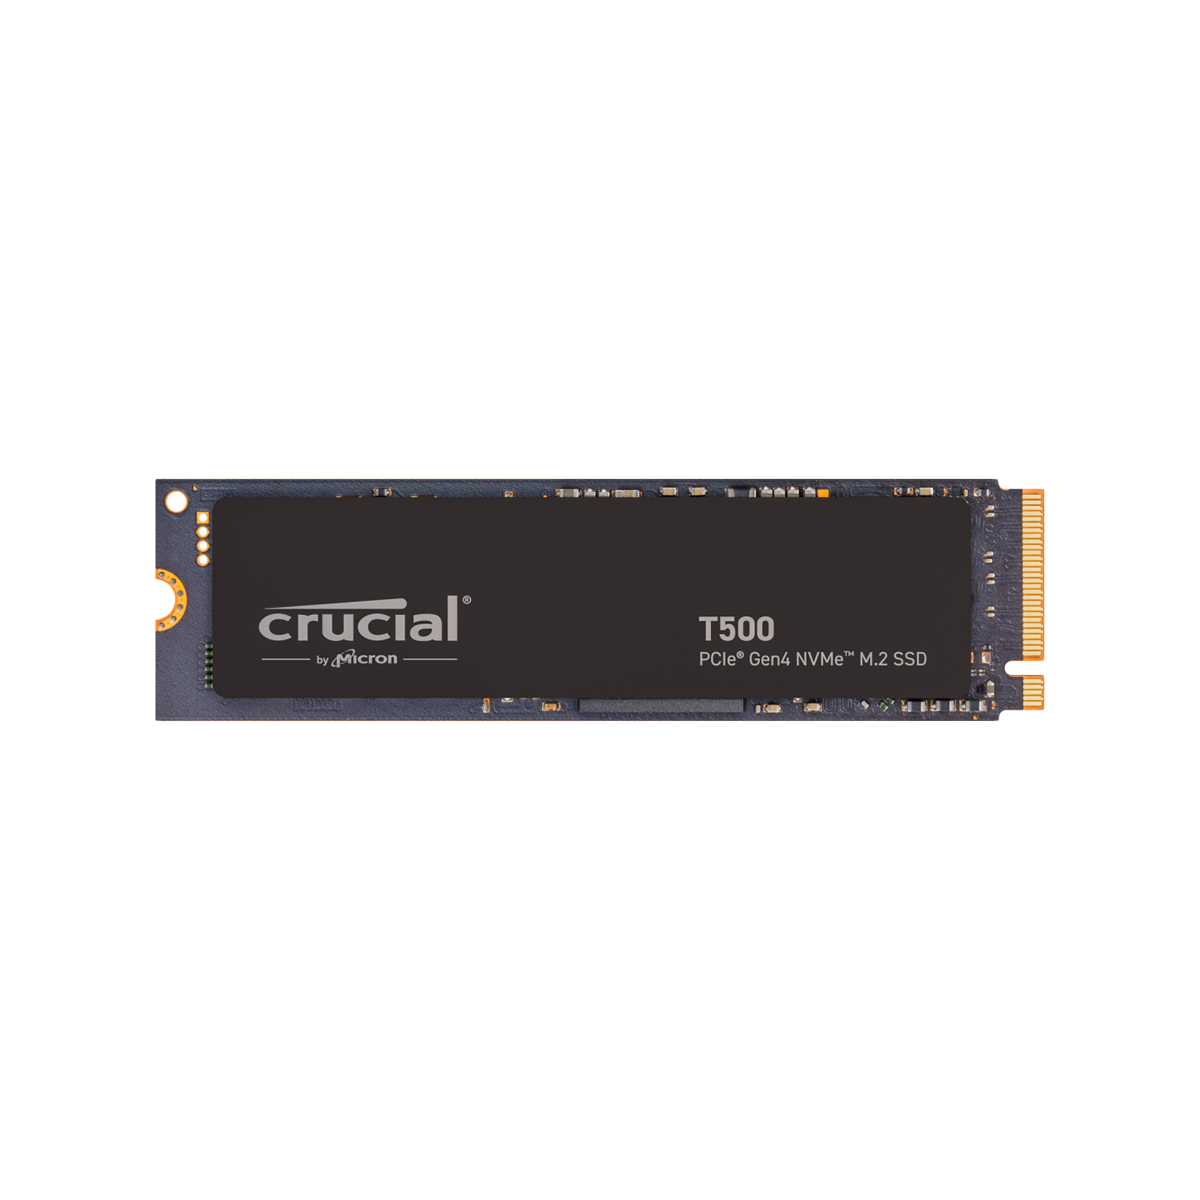 Crucial T500 1TB PCIE GEN4 NVME M.2 SSD